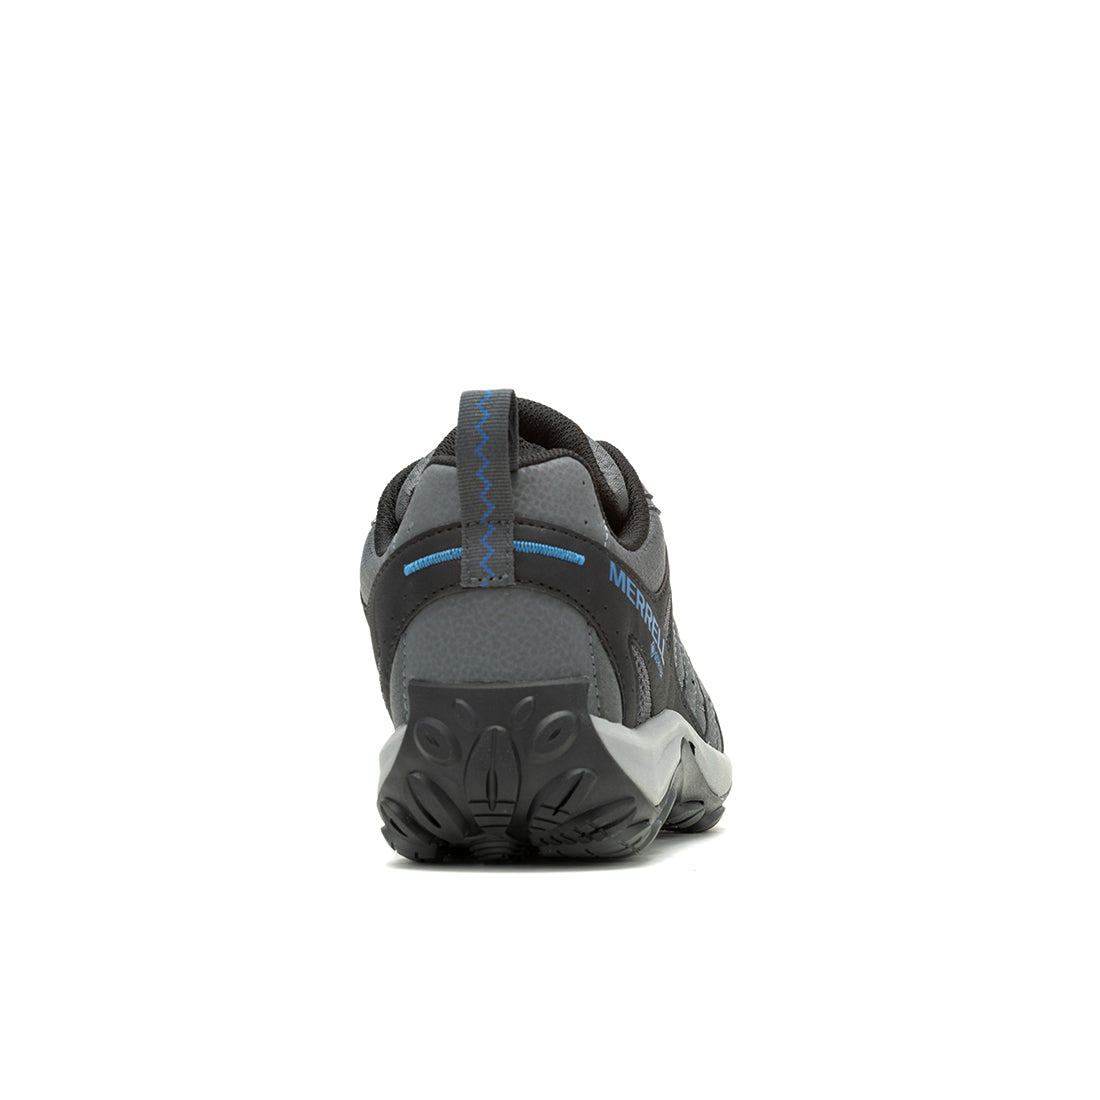 Accentor 3 Sport Gtx - Rock/Blue Mens Hiking Shoes